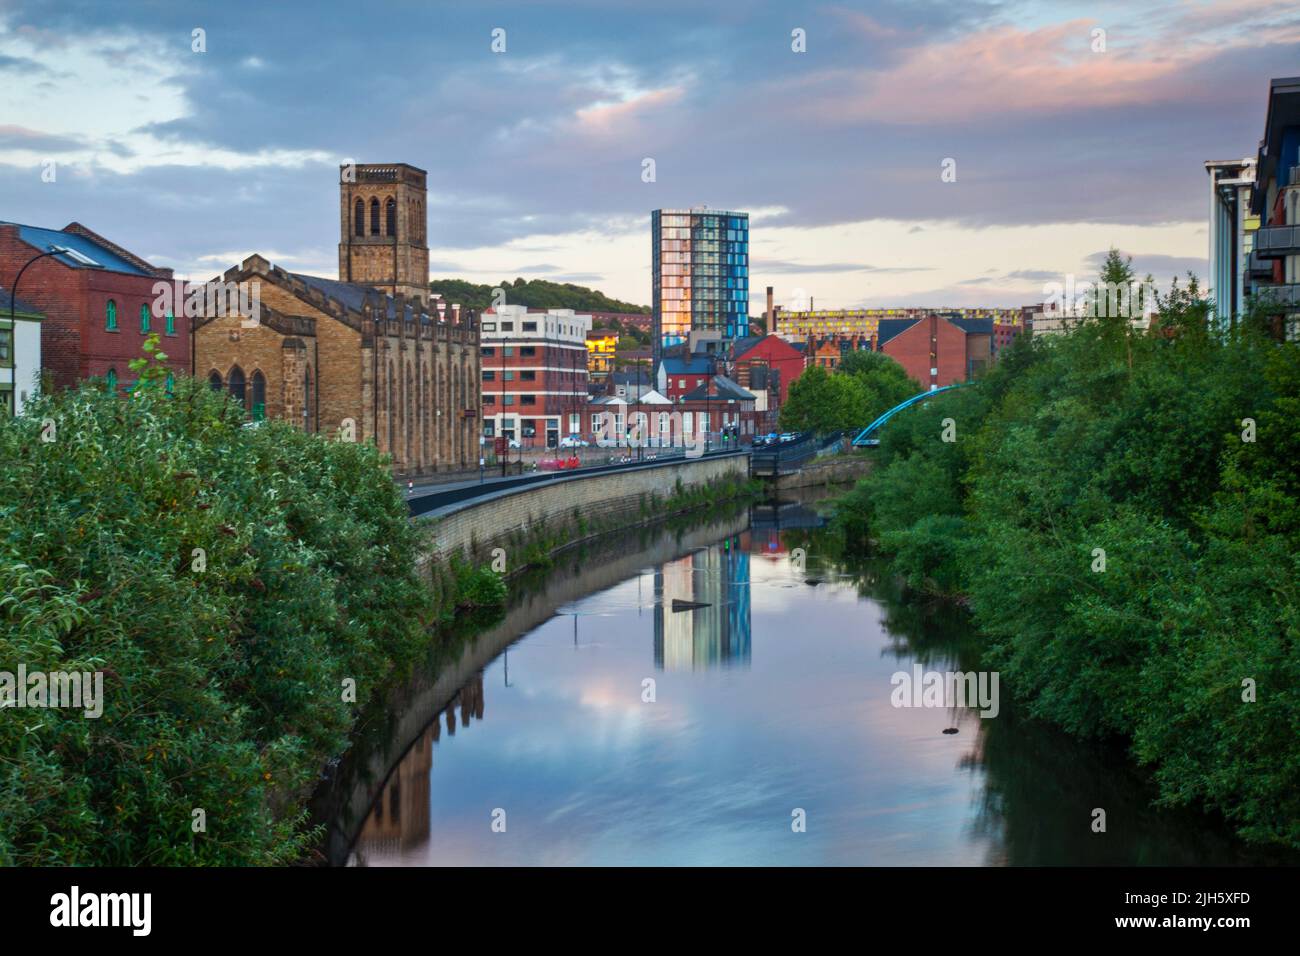 Looking towards St Paul's in Sheffield from Derek Dooley Way Stock Photo